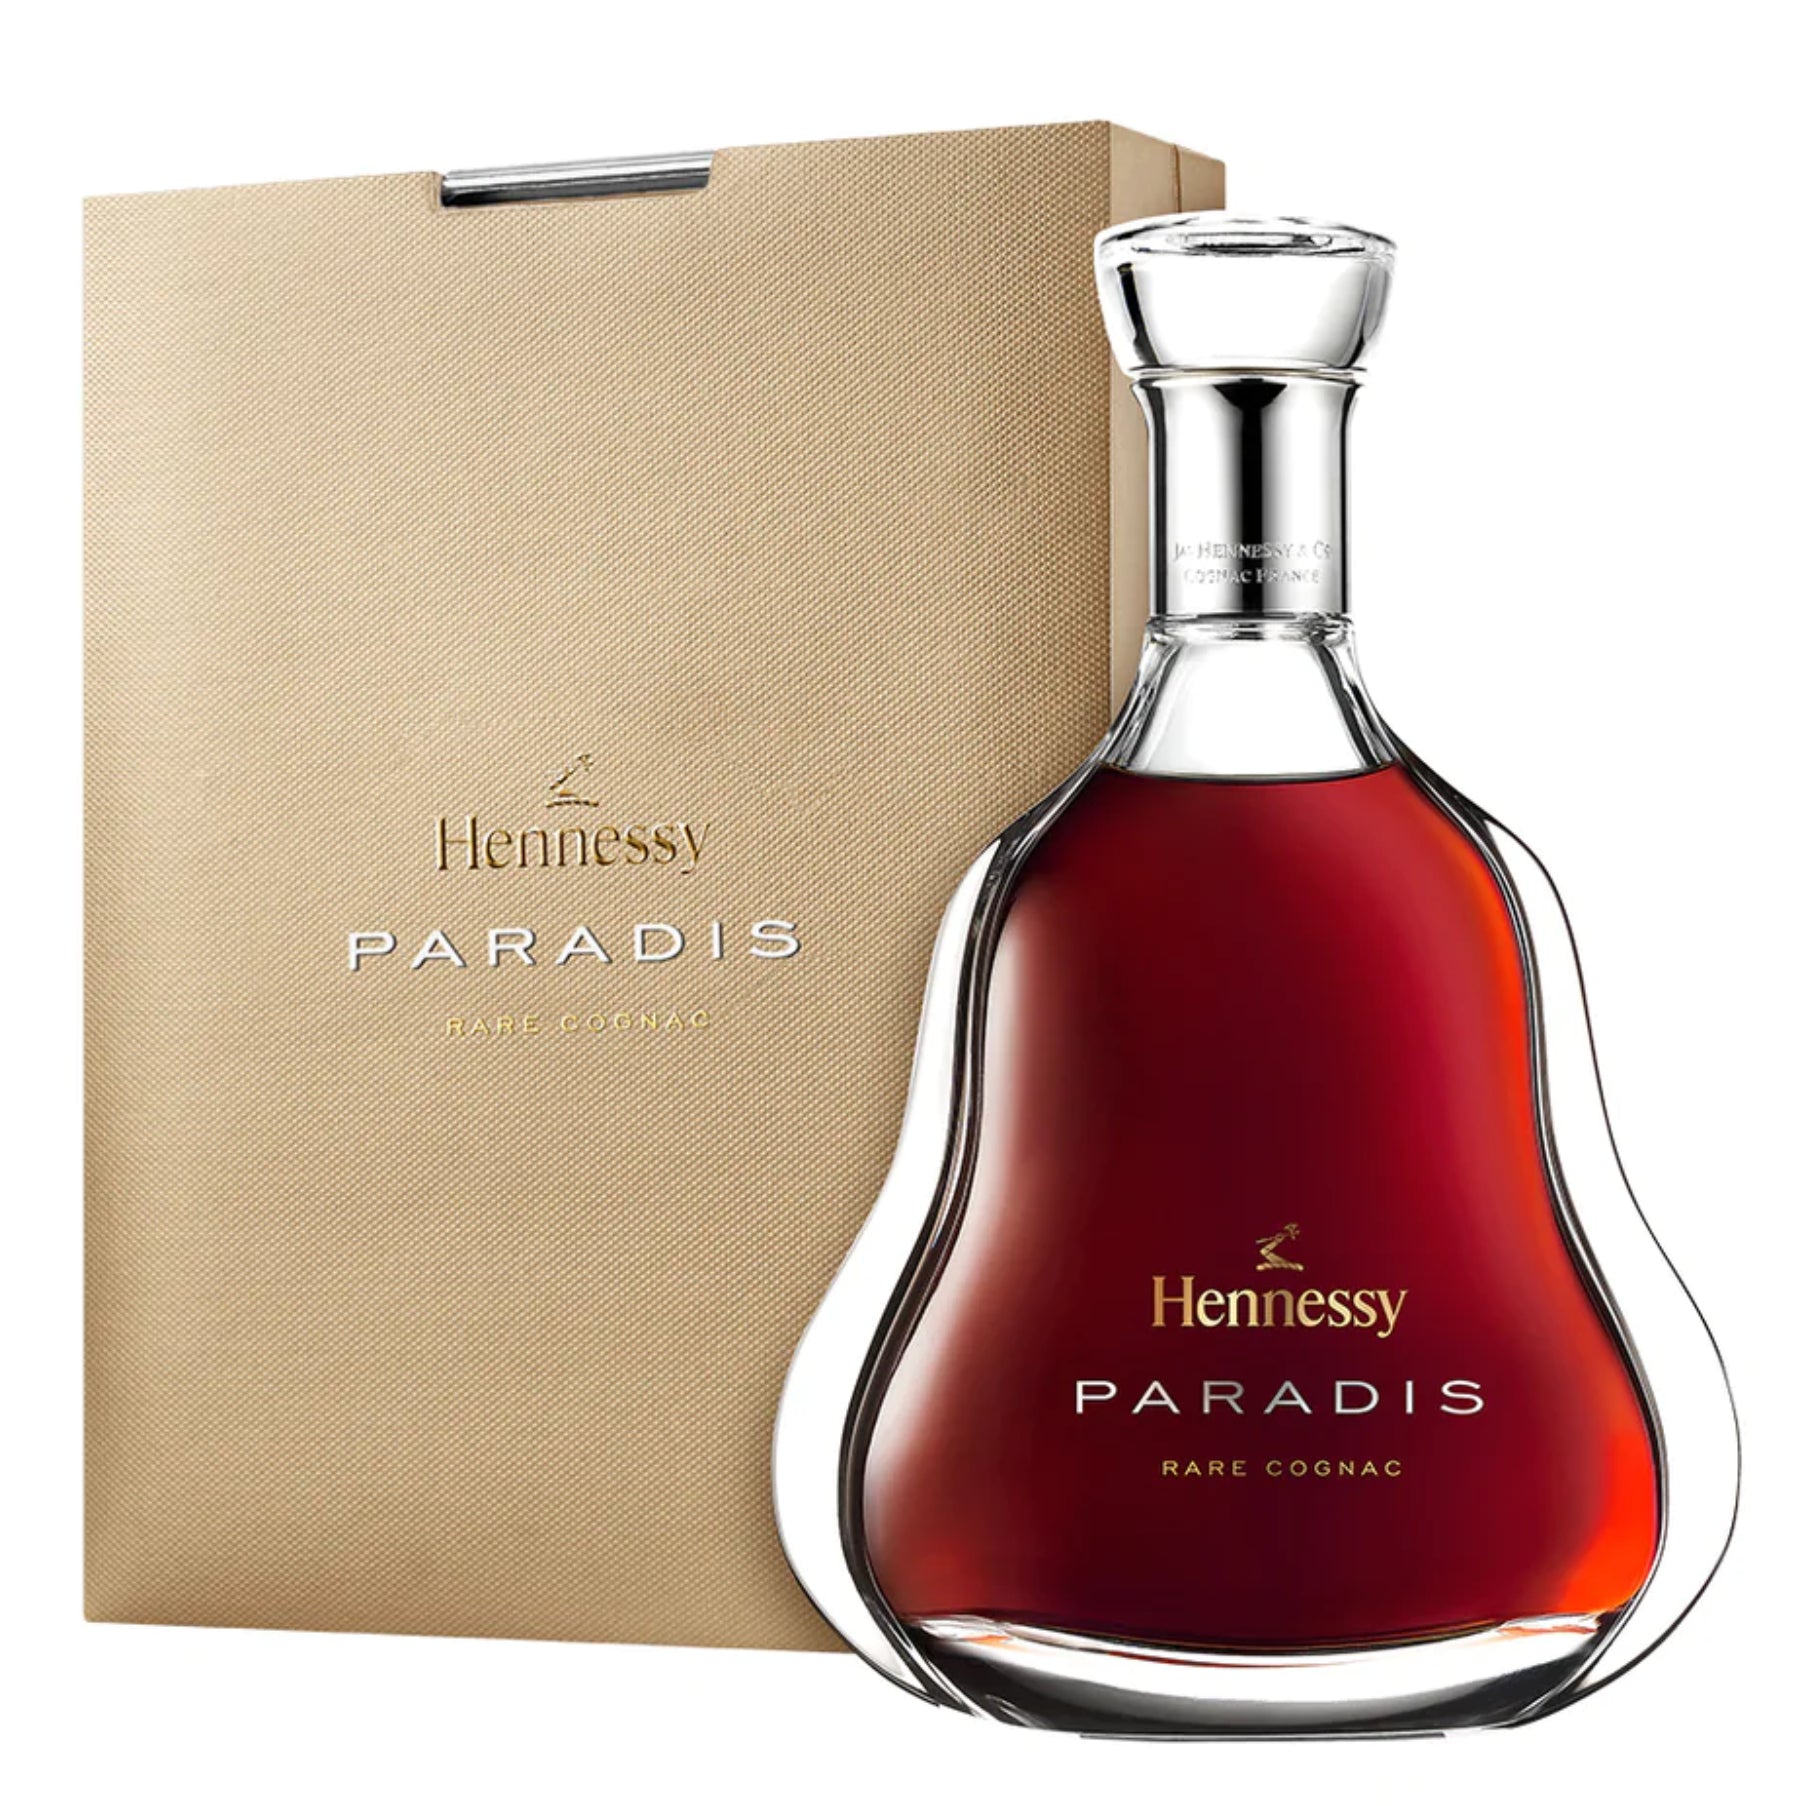 Hennessy Paradis - Rare Cognac - Travel Retail 40% - World Wine & Whisky